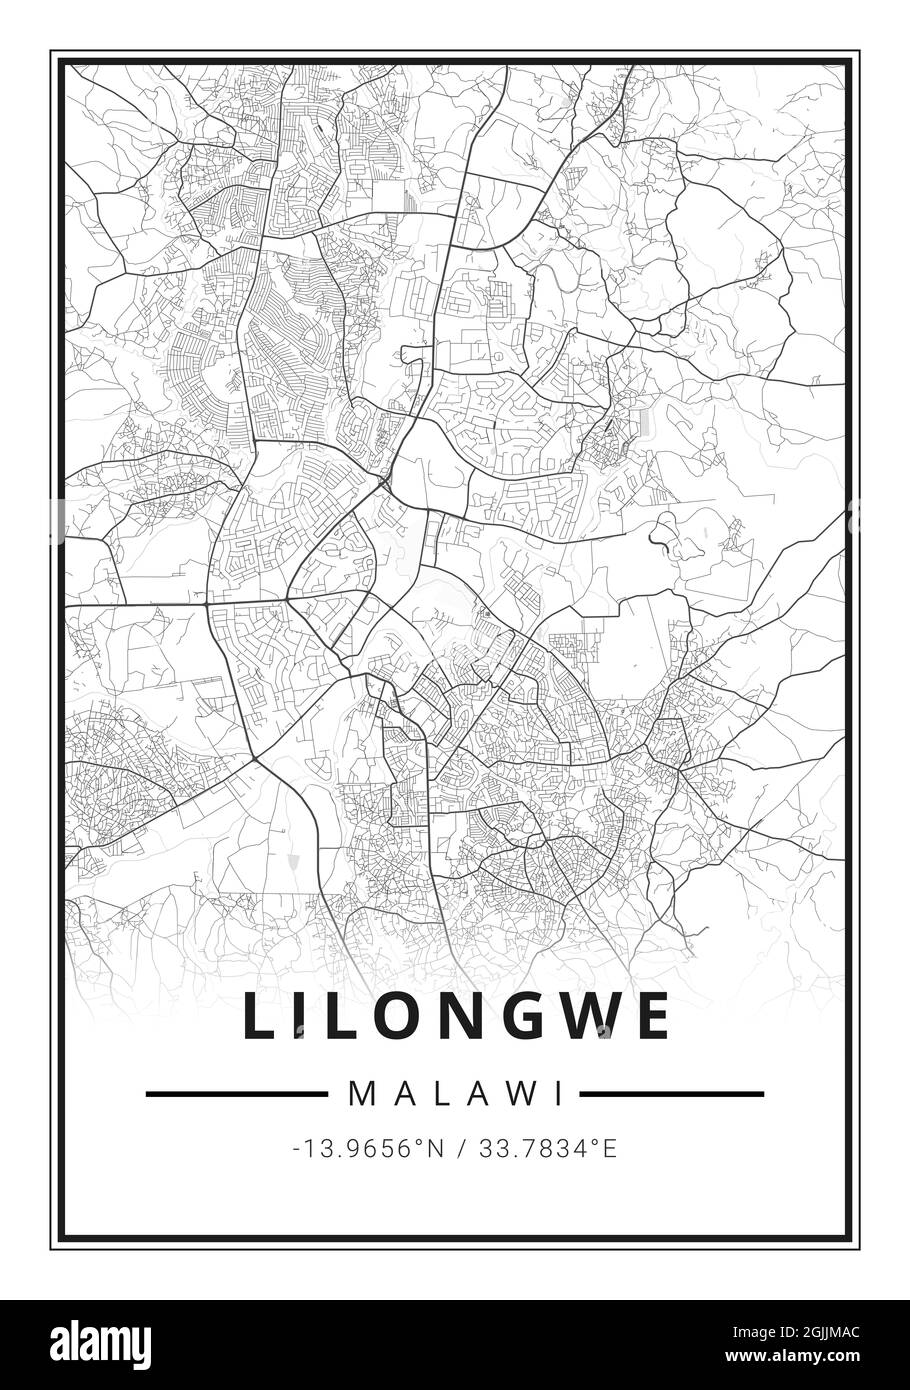 Street map art of Lilongwe city in Malawi - Africa Stock Photo